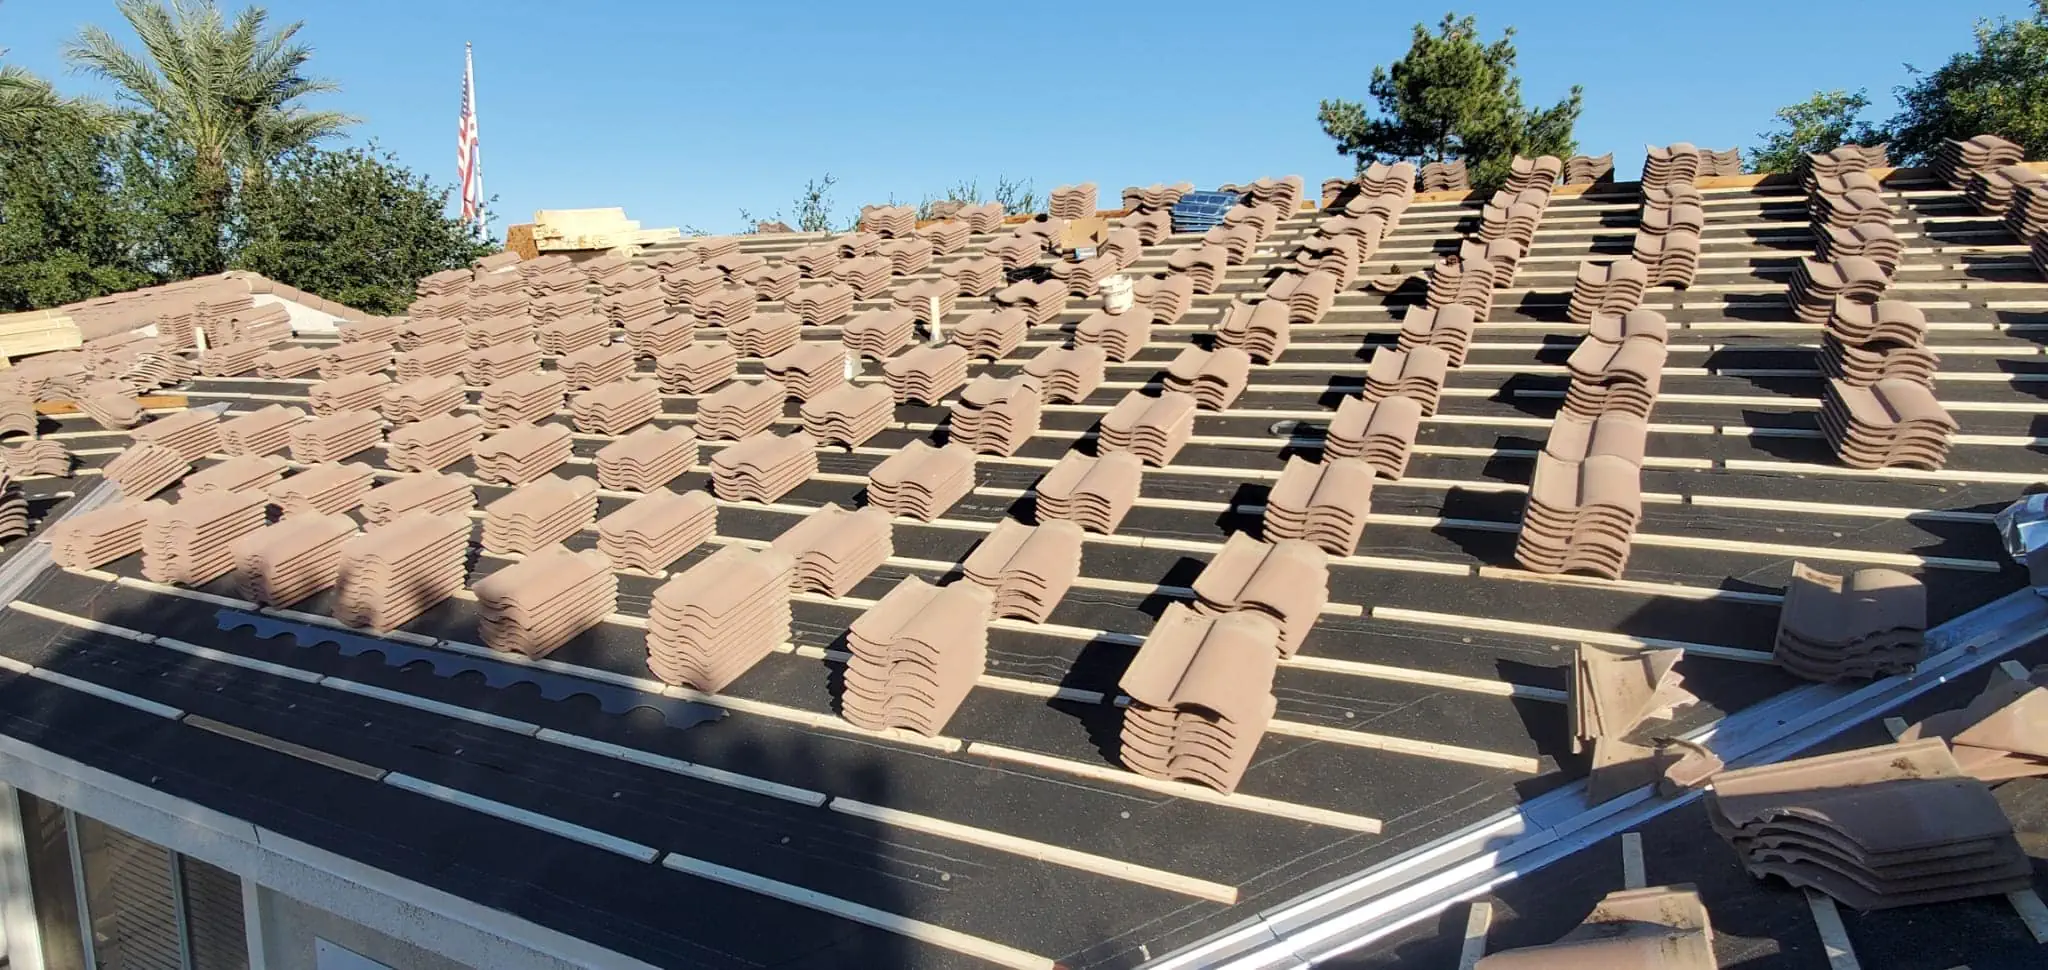 scottsdale new tile roof reroof work